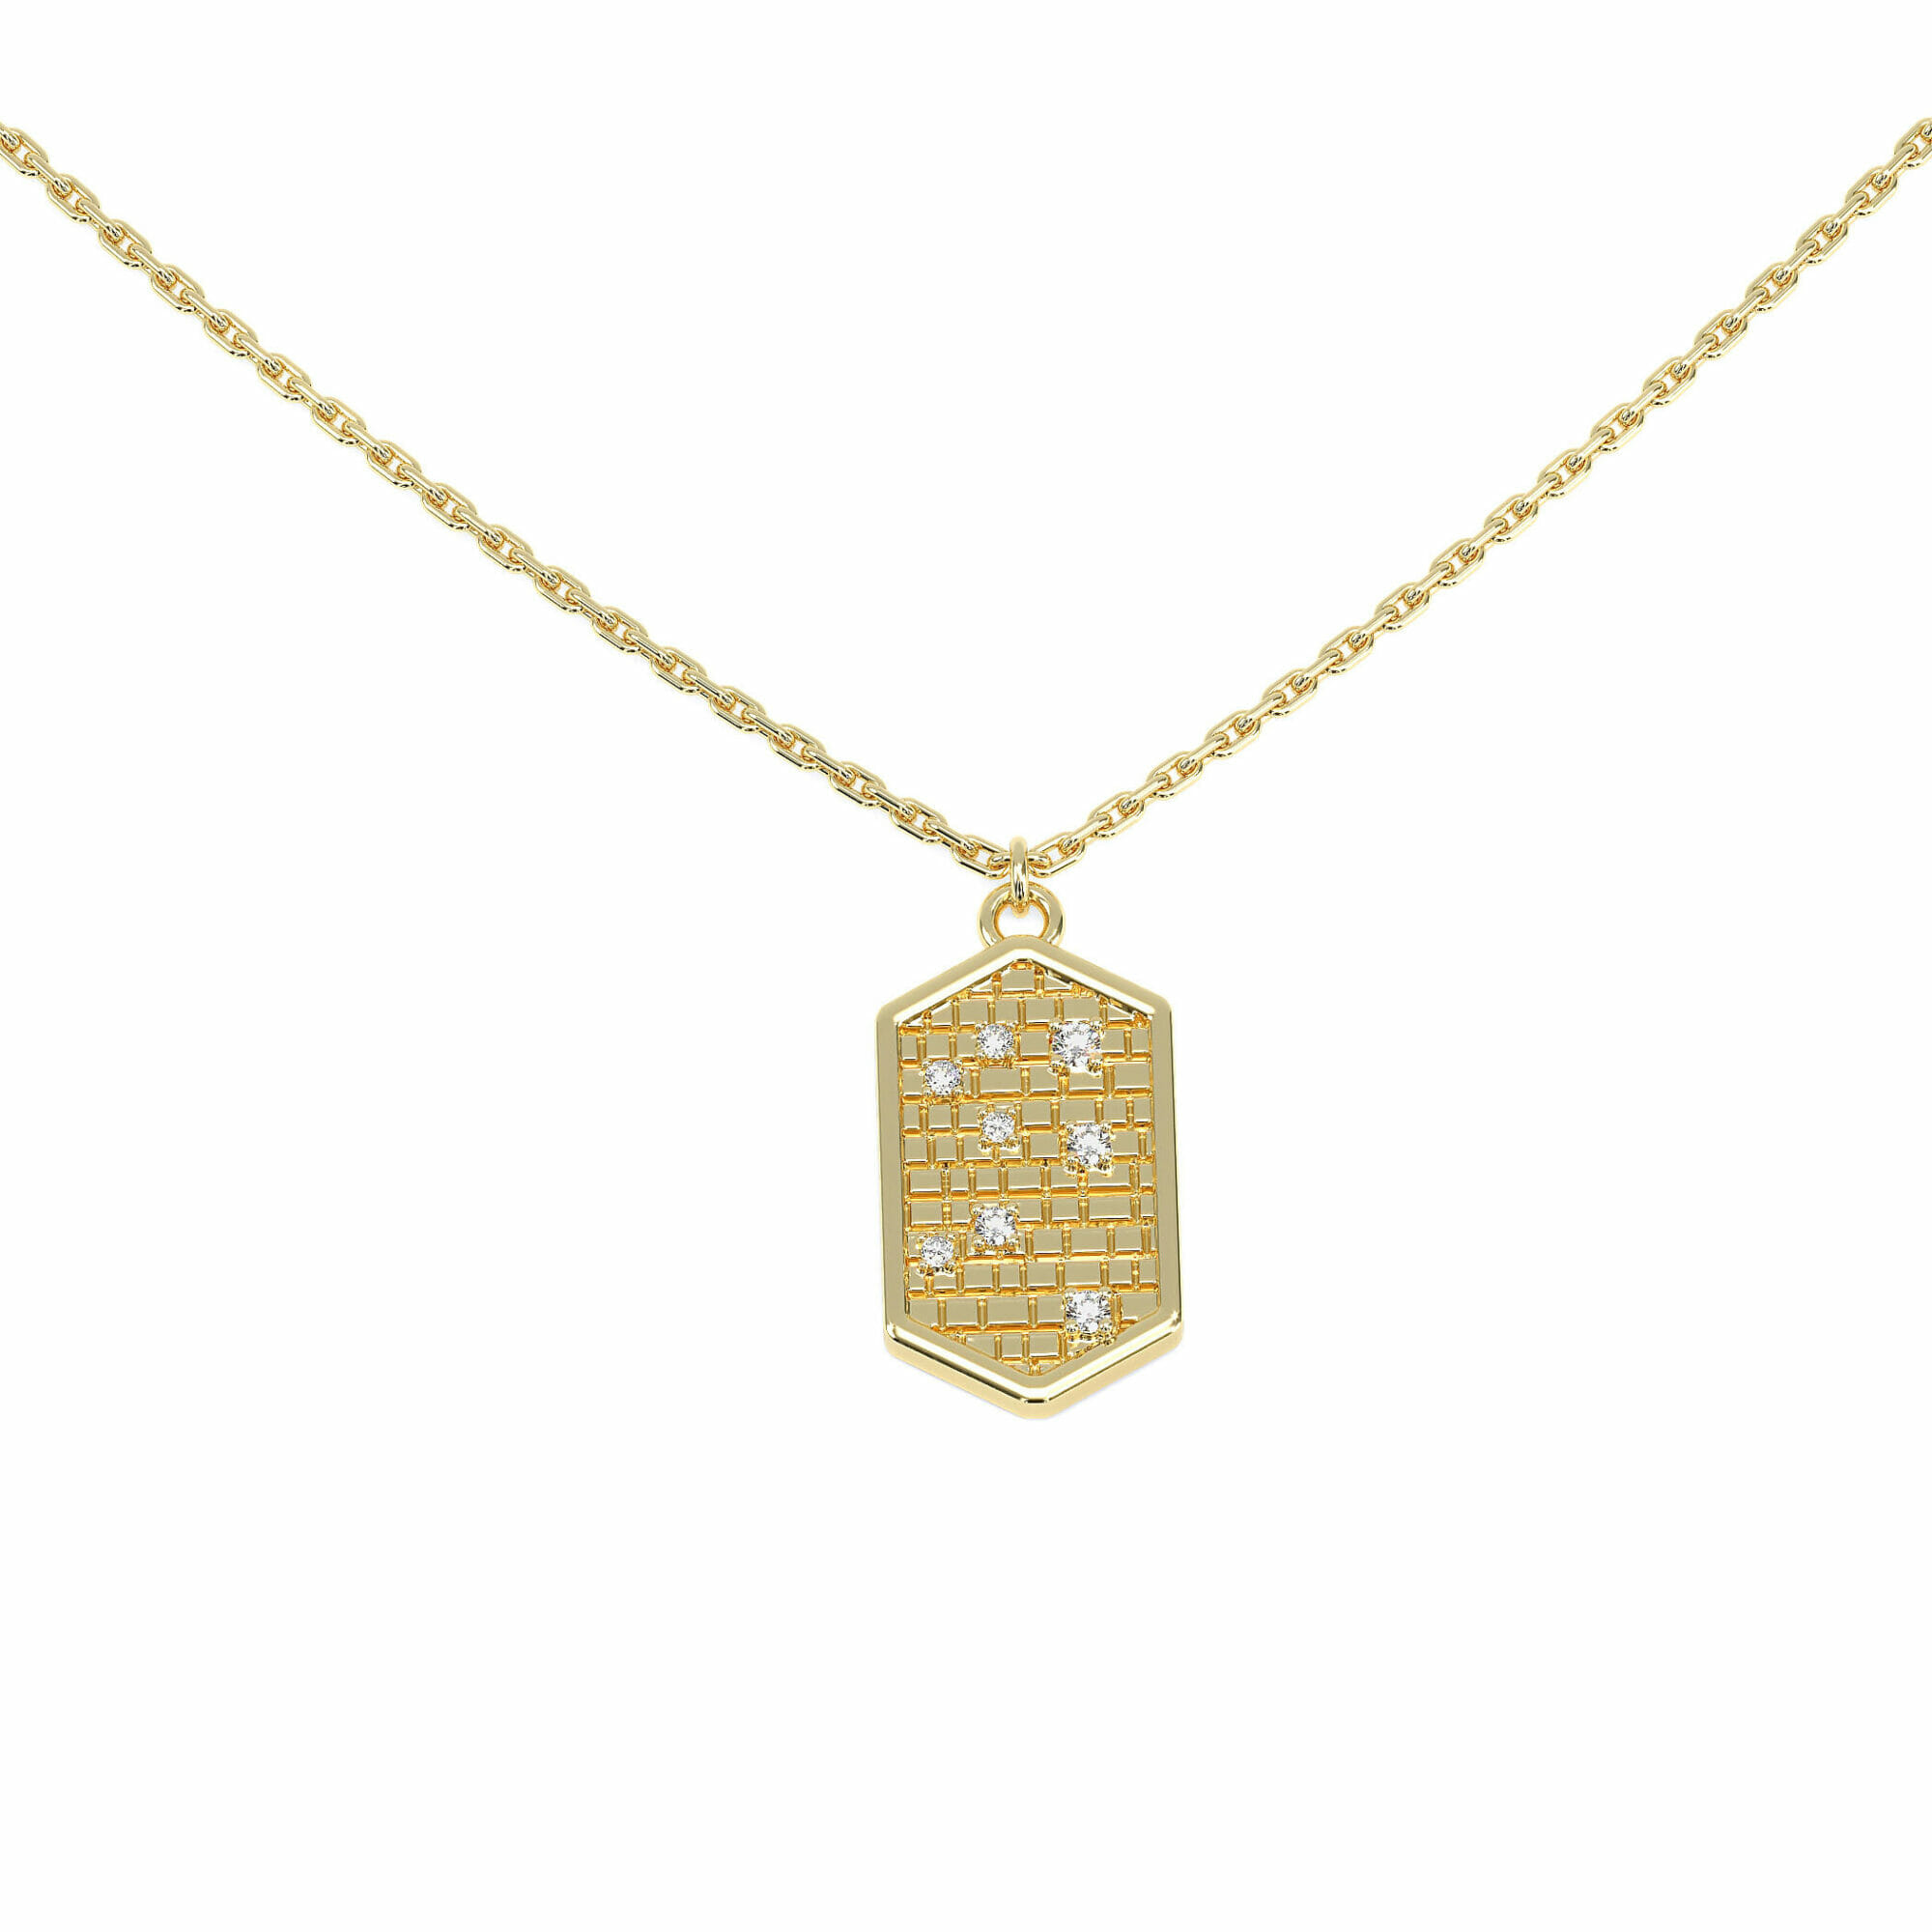 marvin douglas linares jewelry design Emerging Designers Diamond Initiative eddi playon pendant necklace